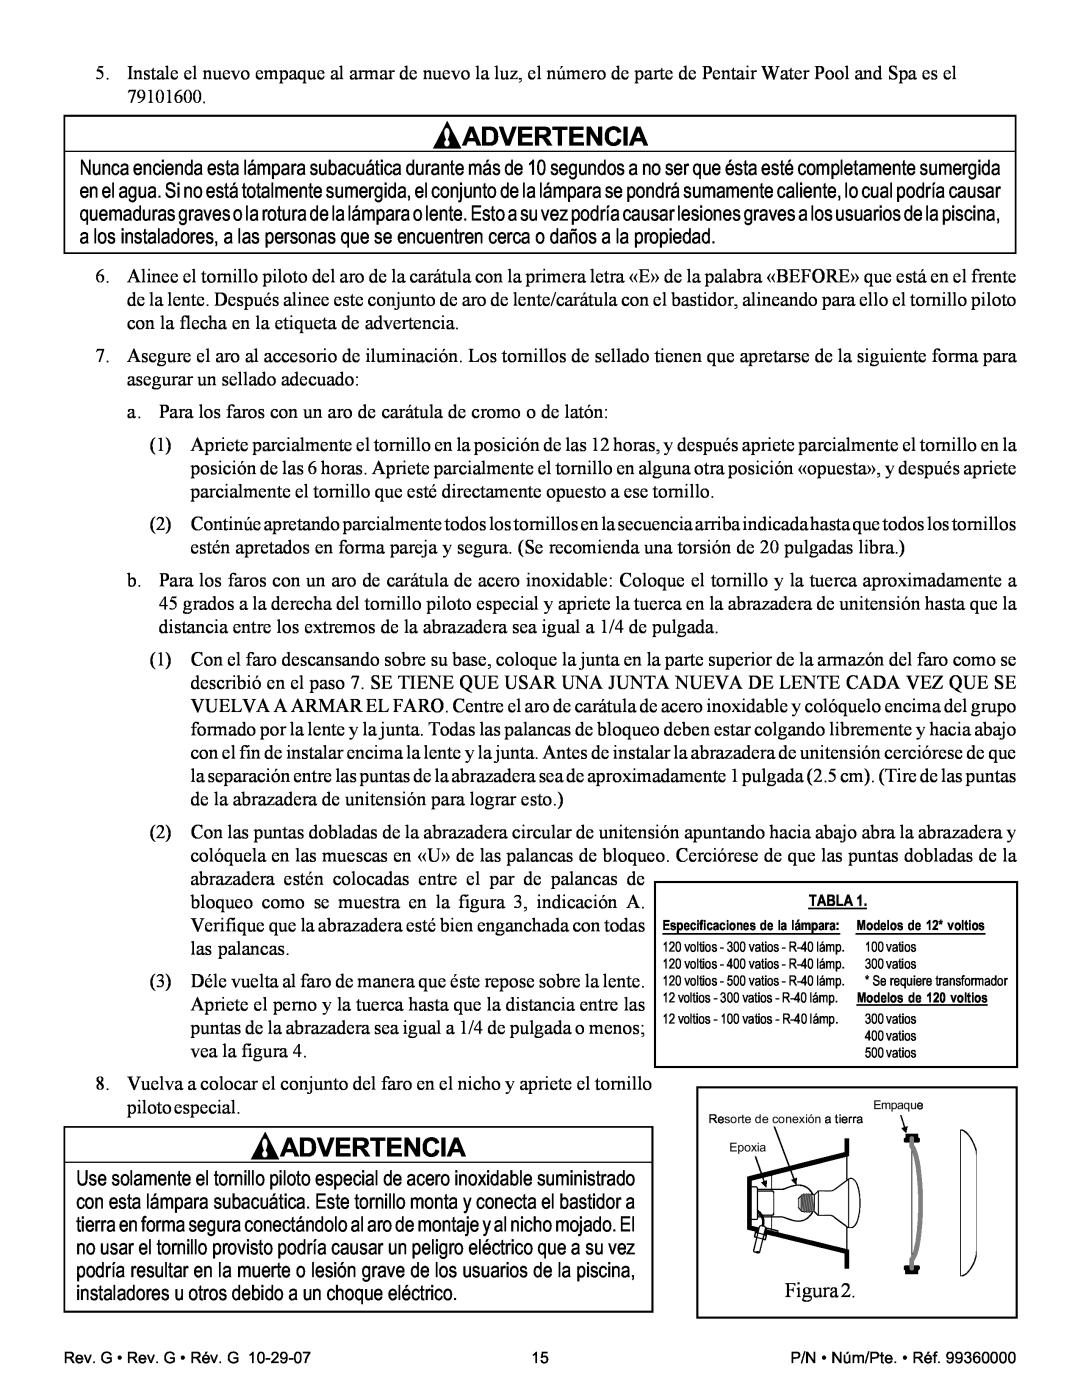 Pentair Amerlite important safety instructions Advertencia, Figura2 